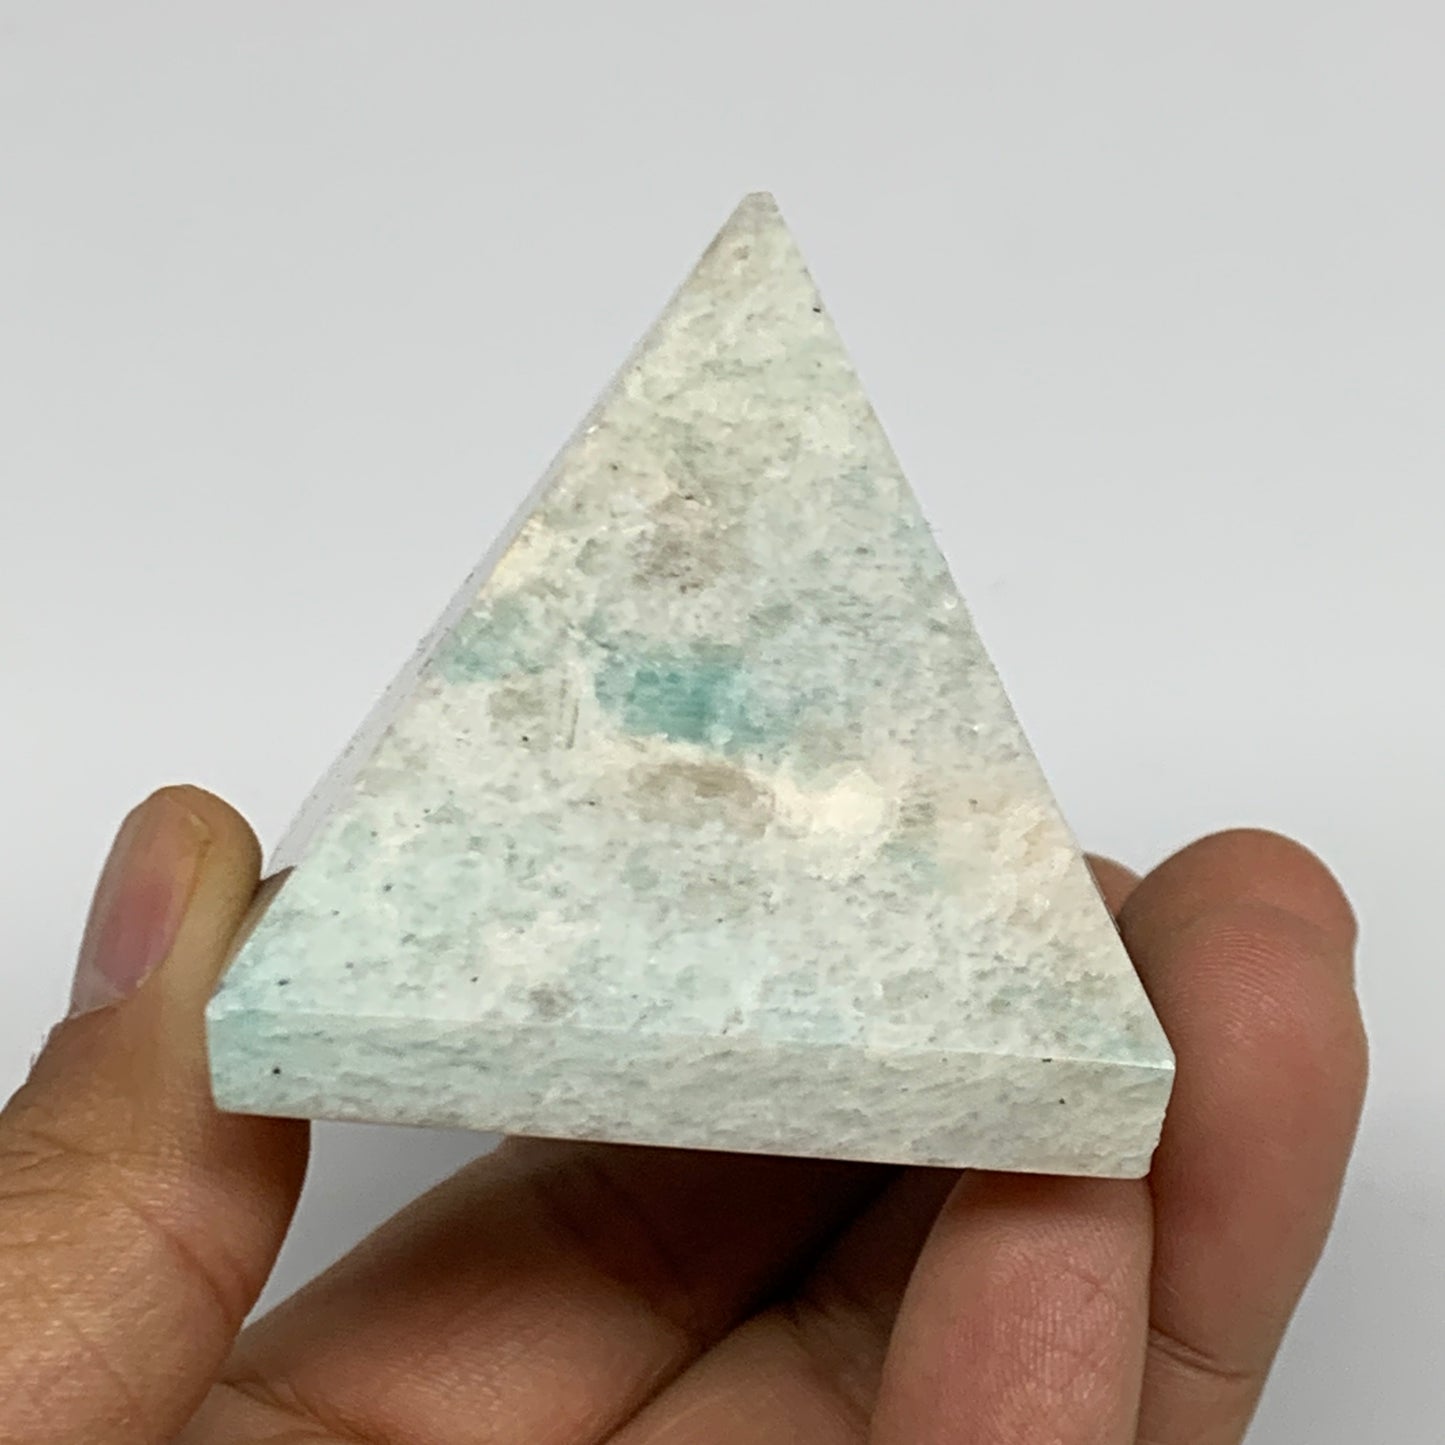 130.6g, 1.9"x2"x1.9", Amazonite Pyramid Gemstone, Decorative Stone, B31823